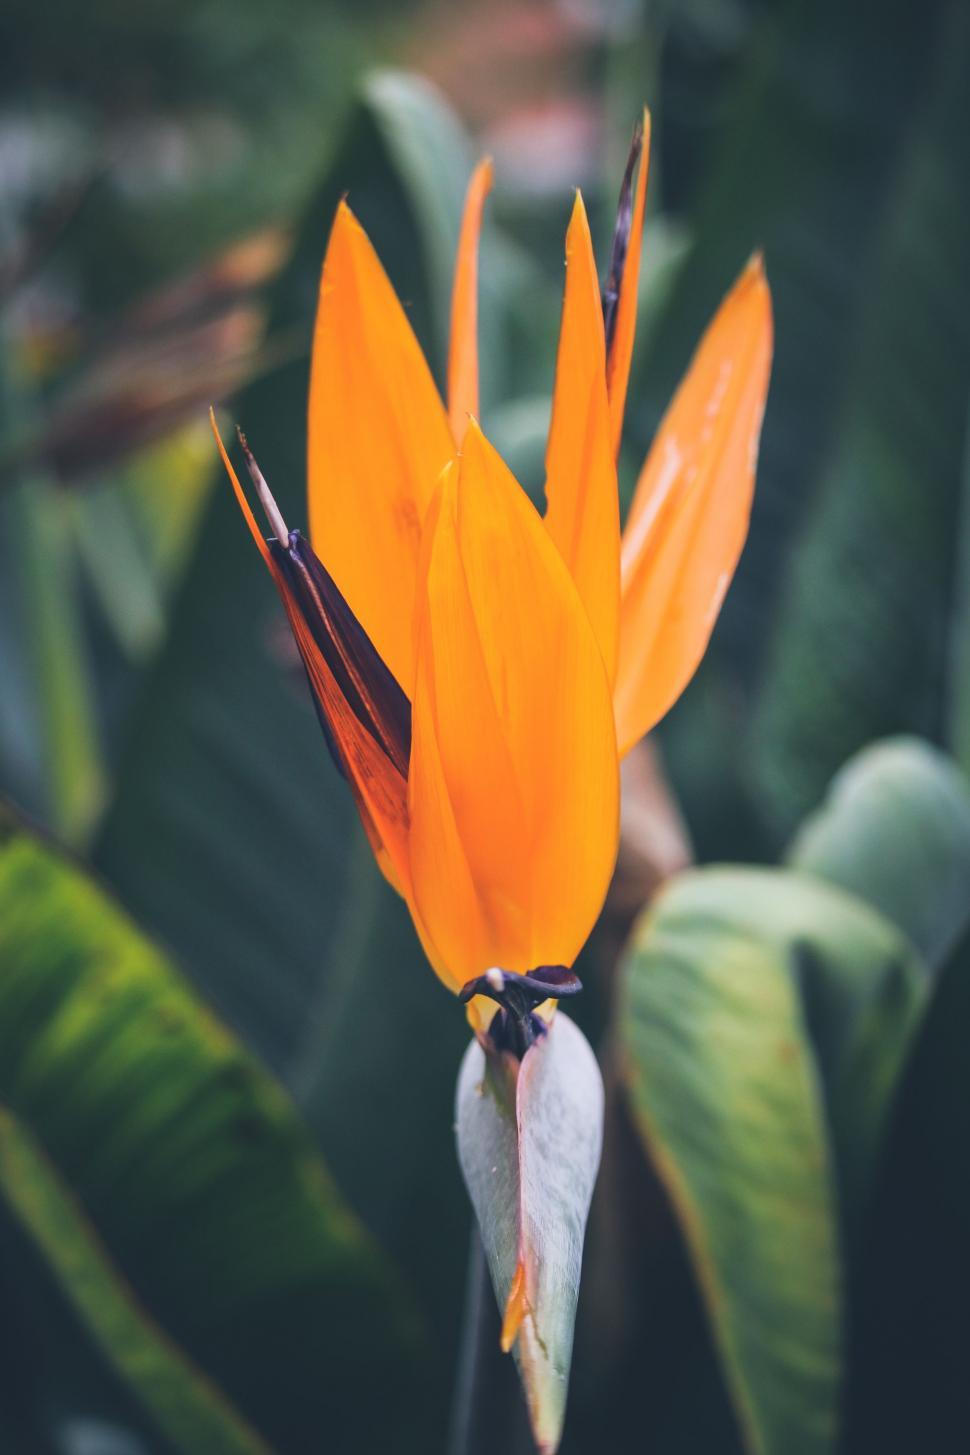 Free Image of Single Orange Flower 